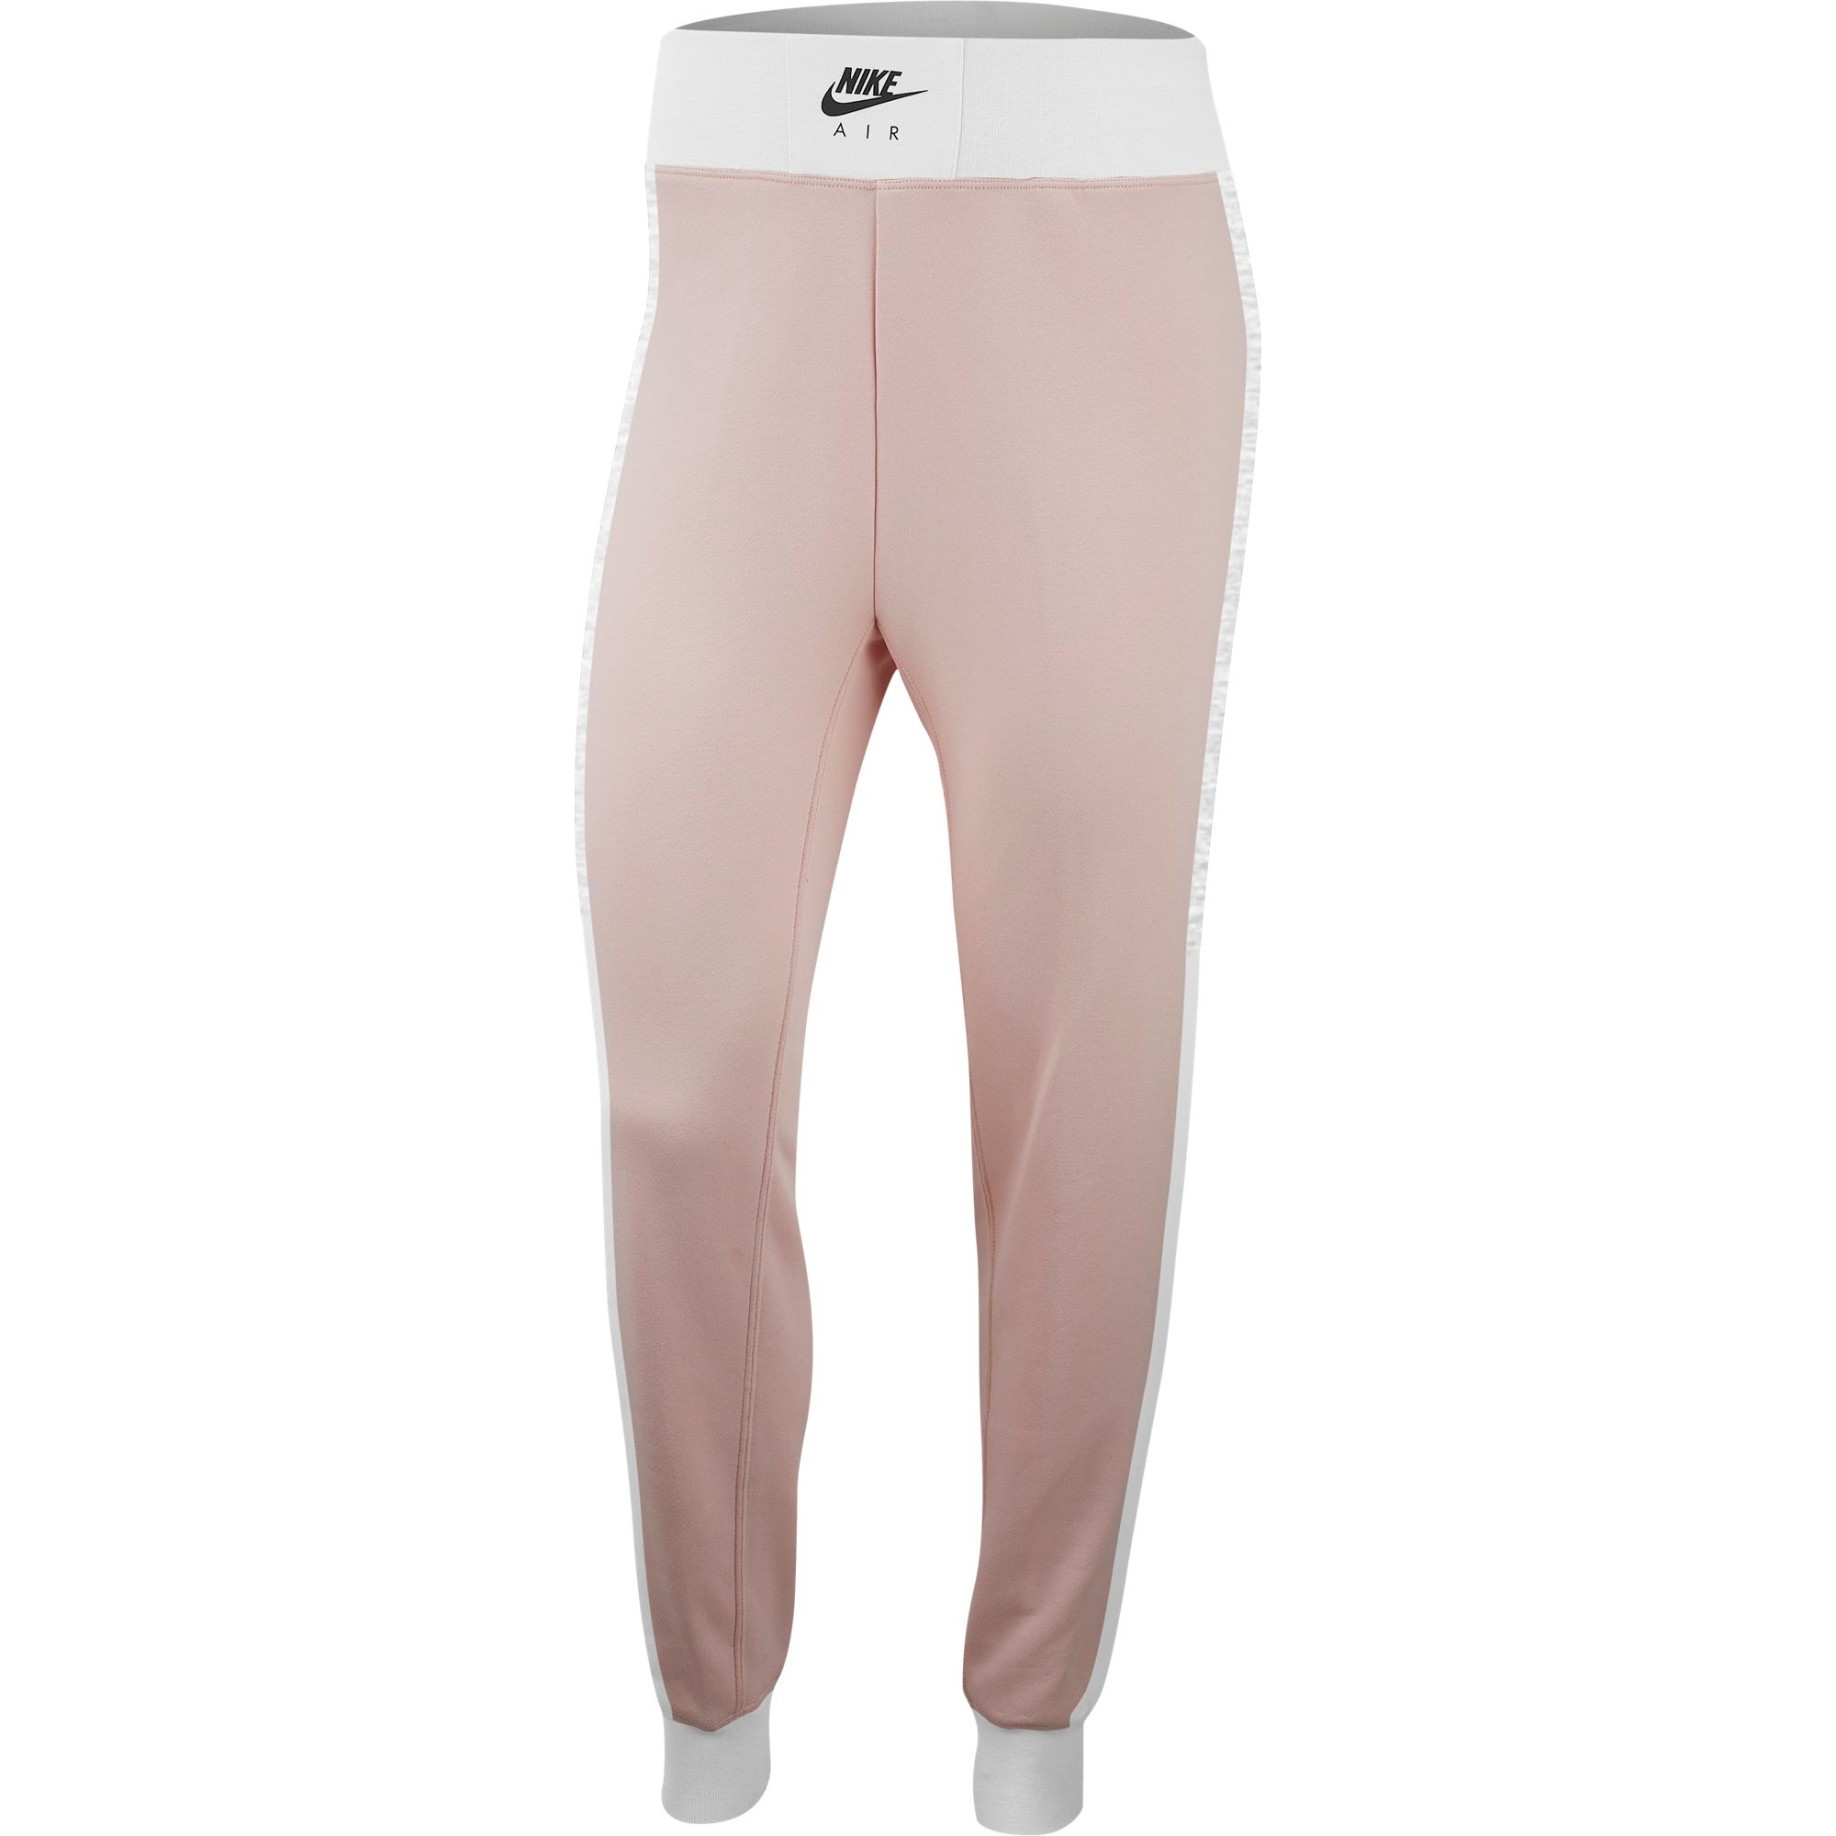 Pants Womens Nike Air colore Grey Pink 